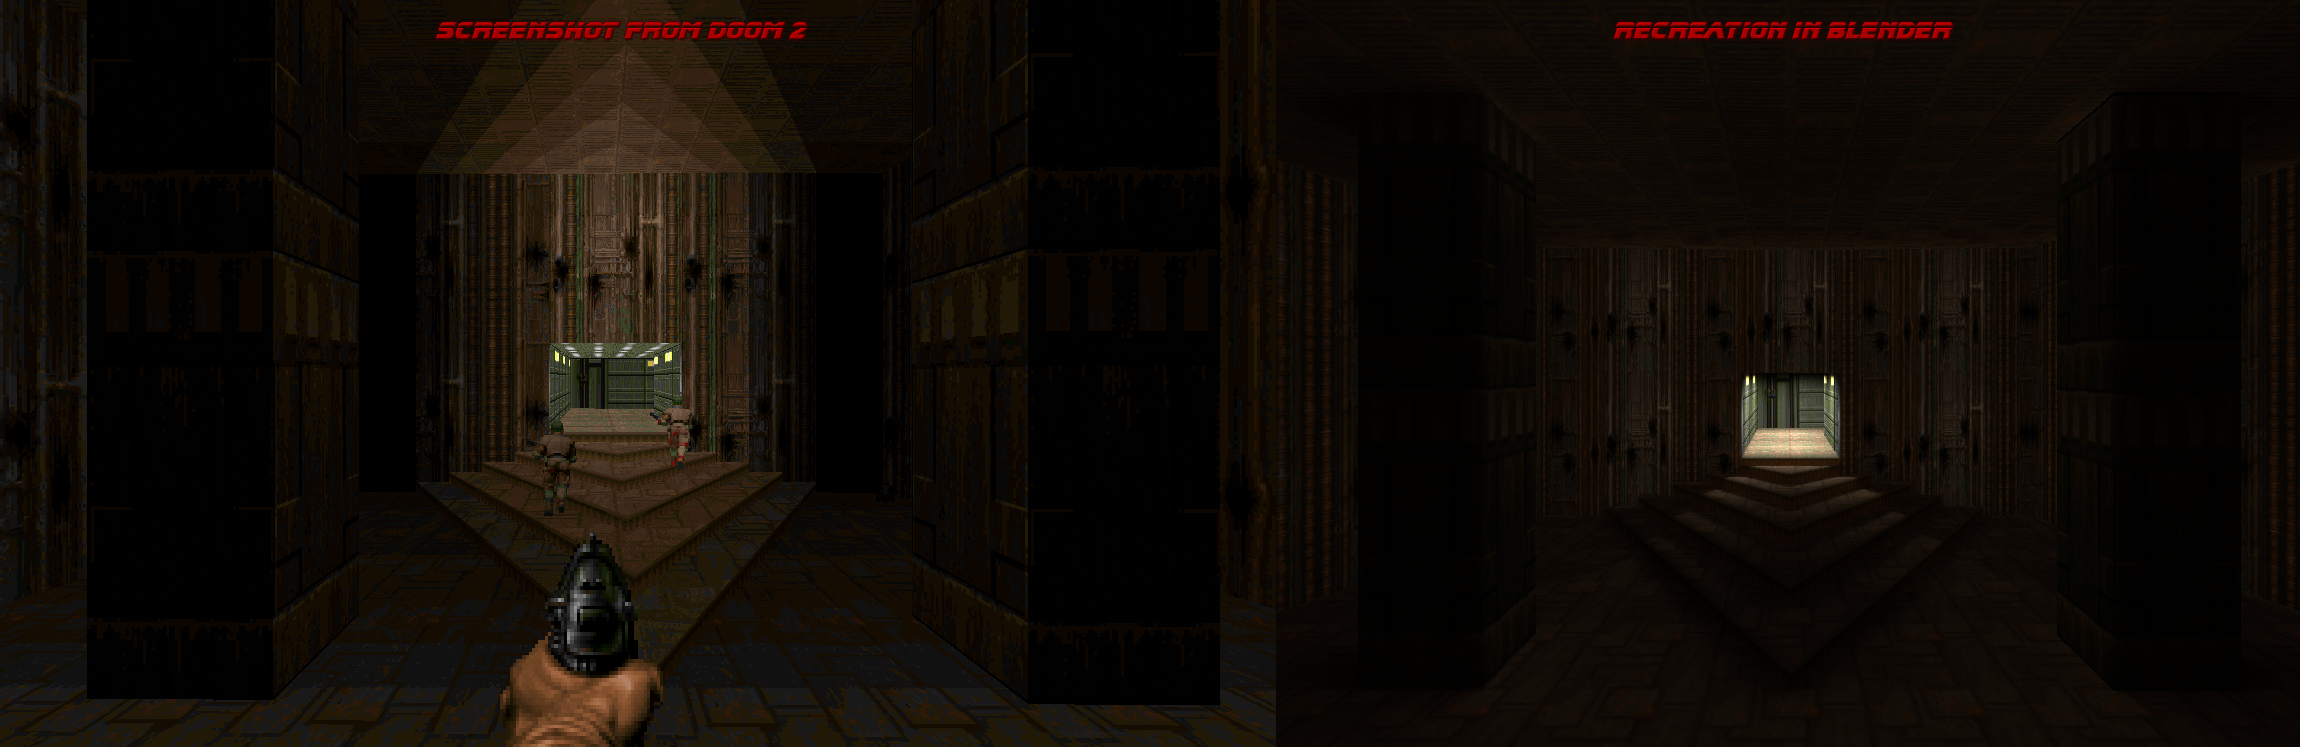 Doom 2 Level 1 Entryway Blender Recreation By Bionickd On Deviantart